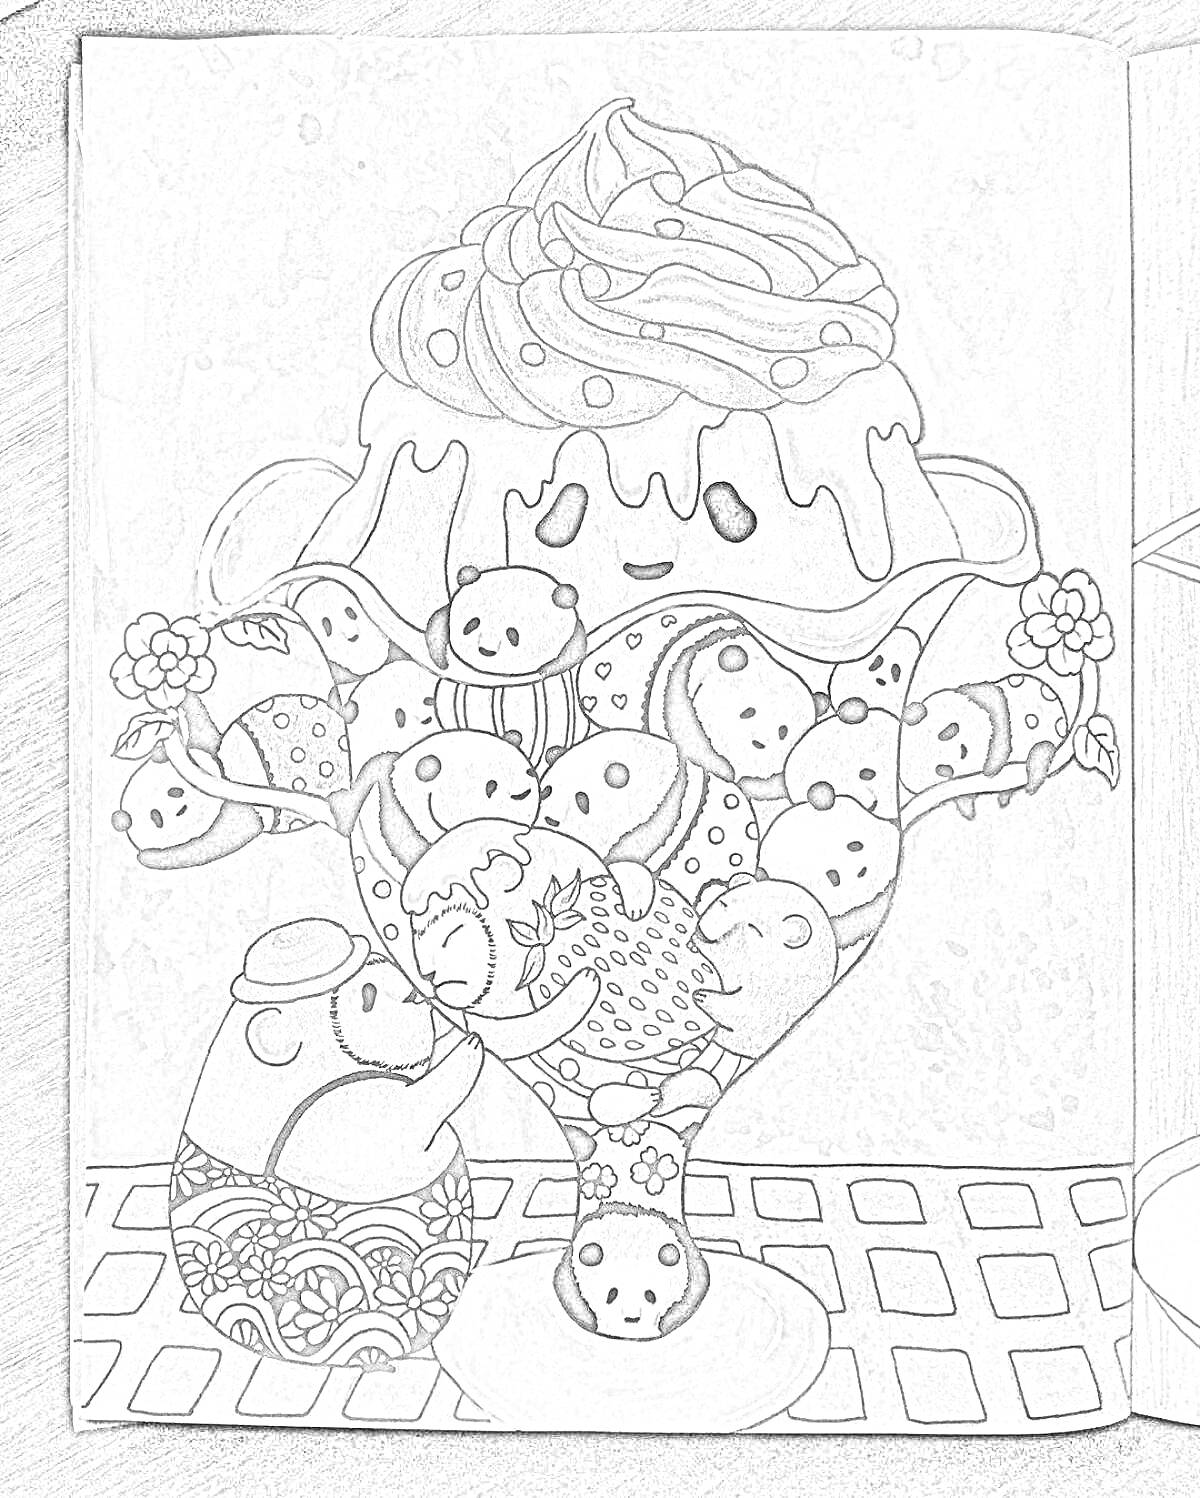 На раскраске изображено: Взбитые сливки, Панды, Мороженое, Наклейки, Стол, Вазочка